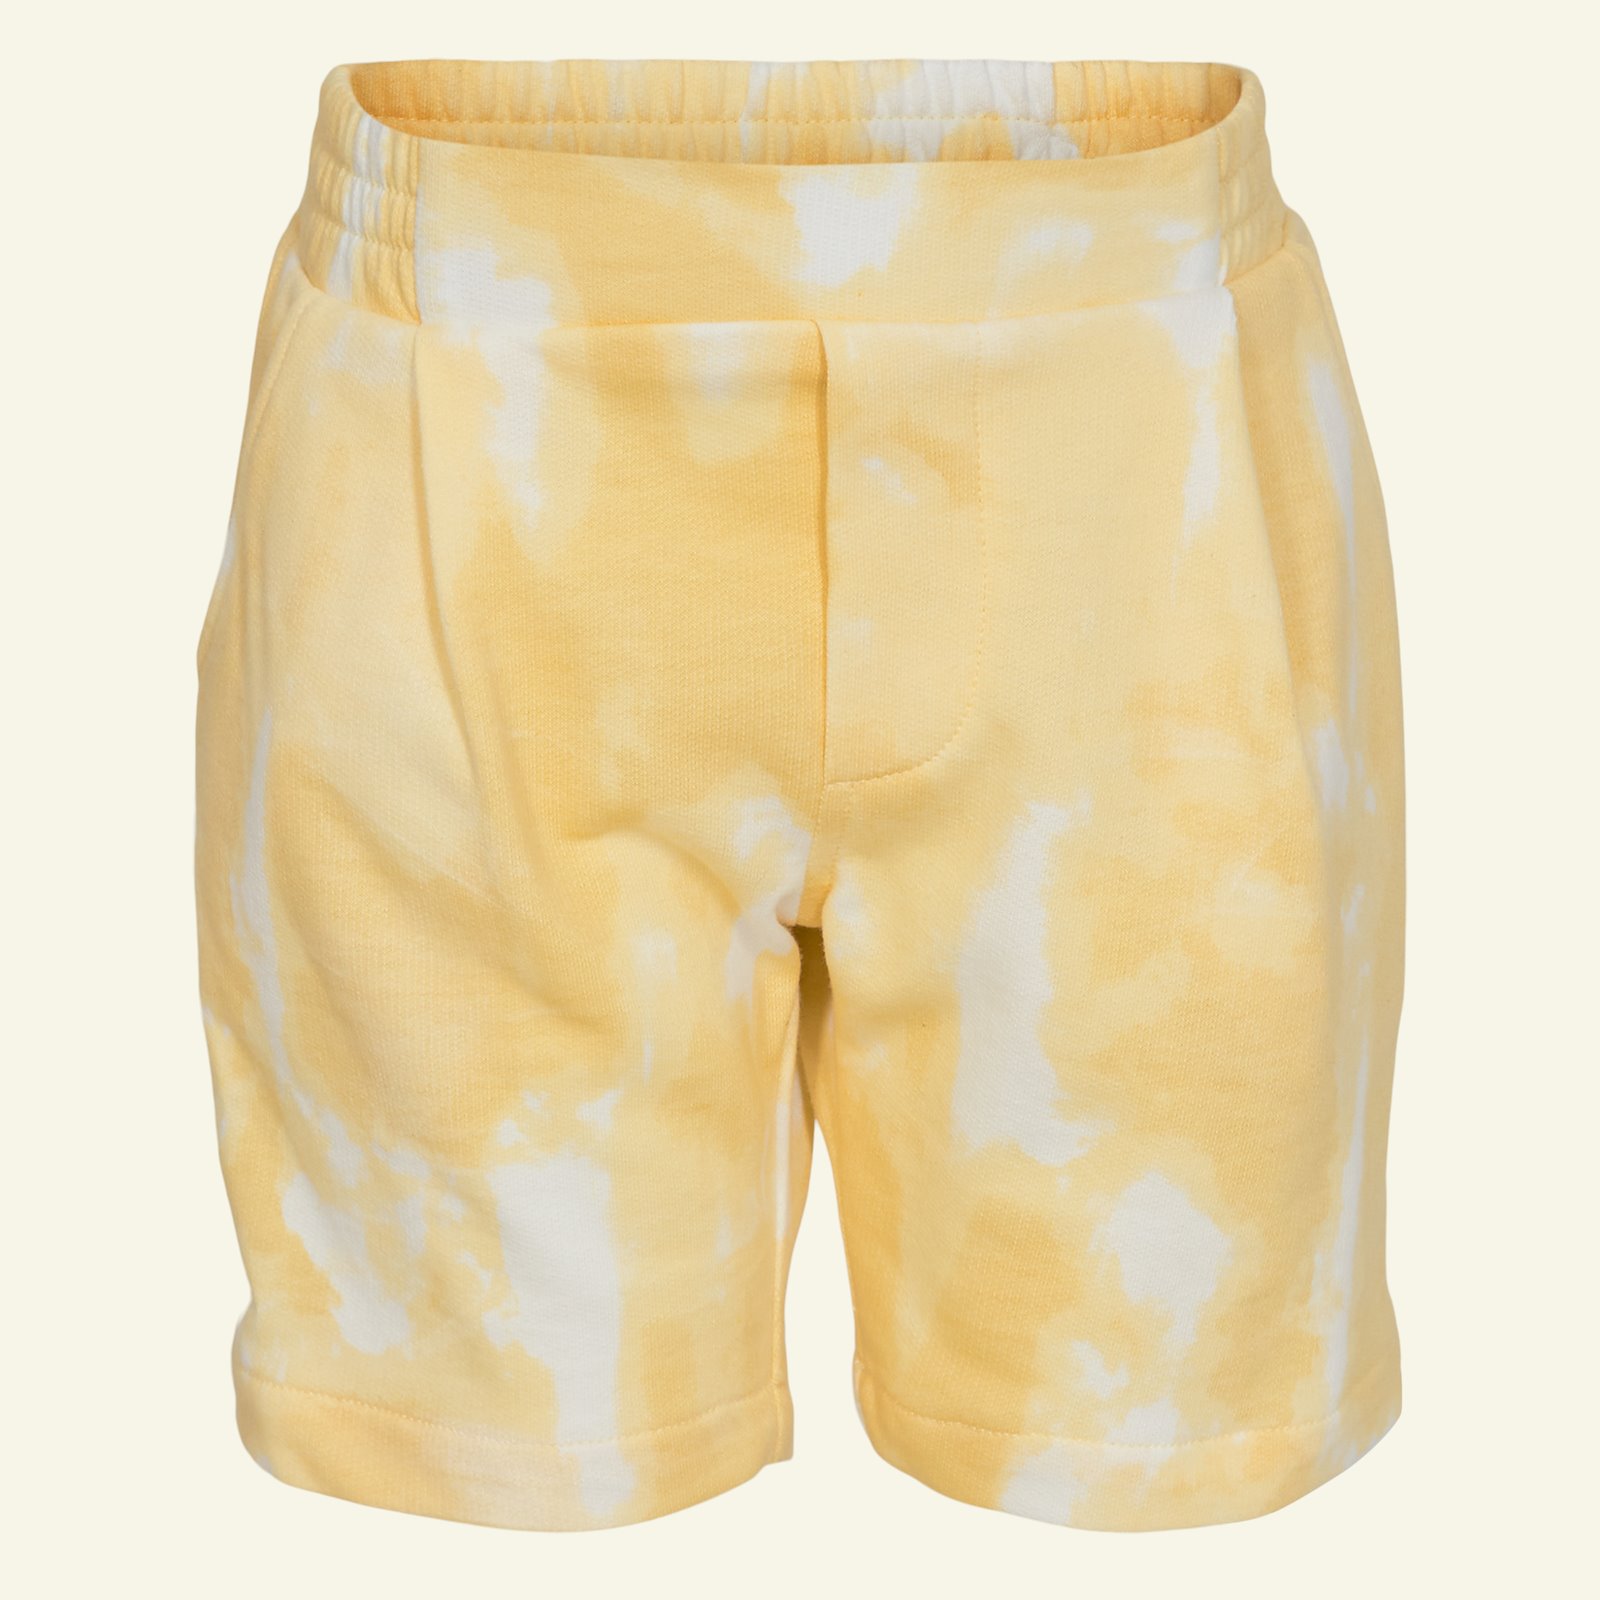 Chino shorts, 98/3y p60036_211782_sskit